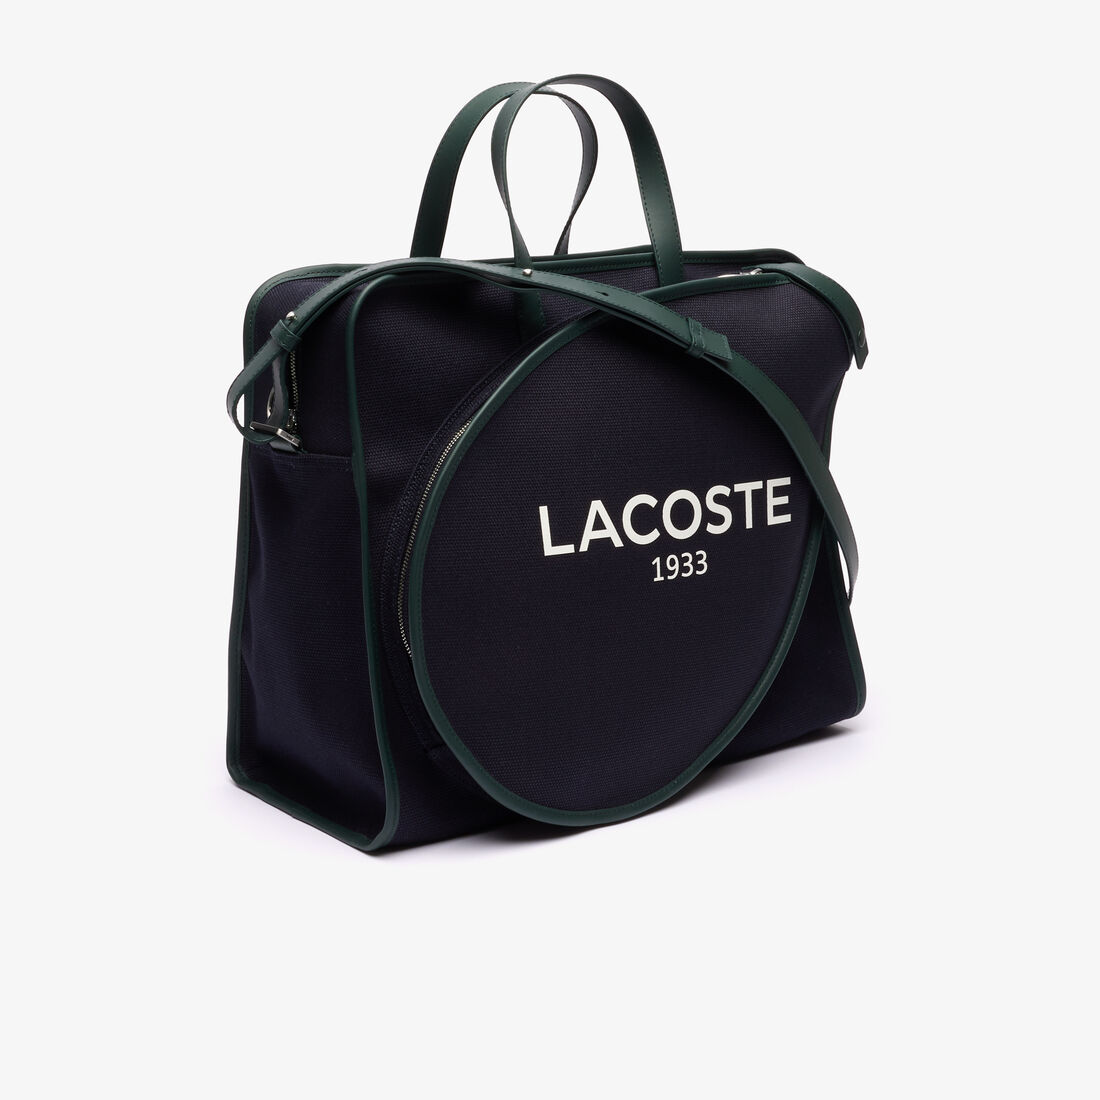 Textile Tennis Bag with Racket Case - NU4341TD-M41